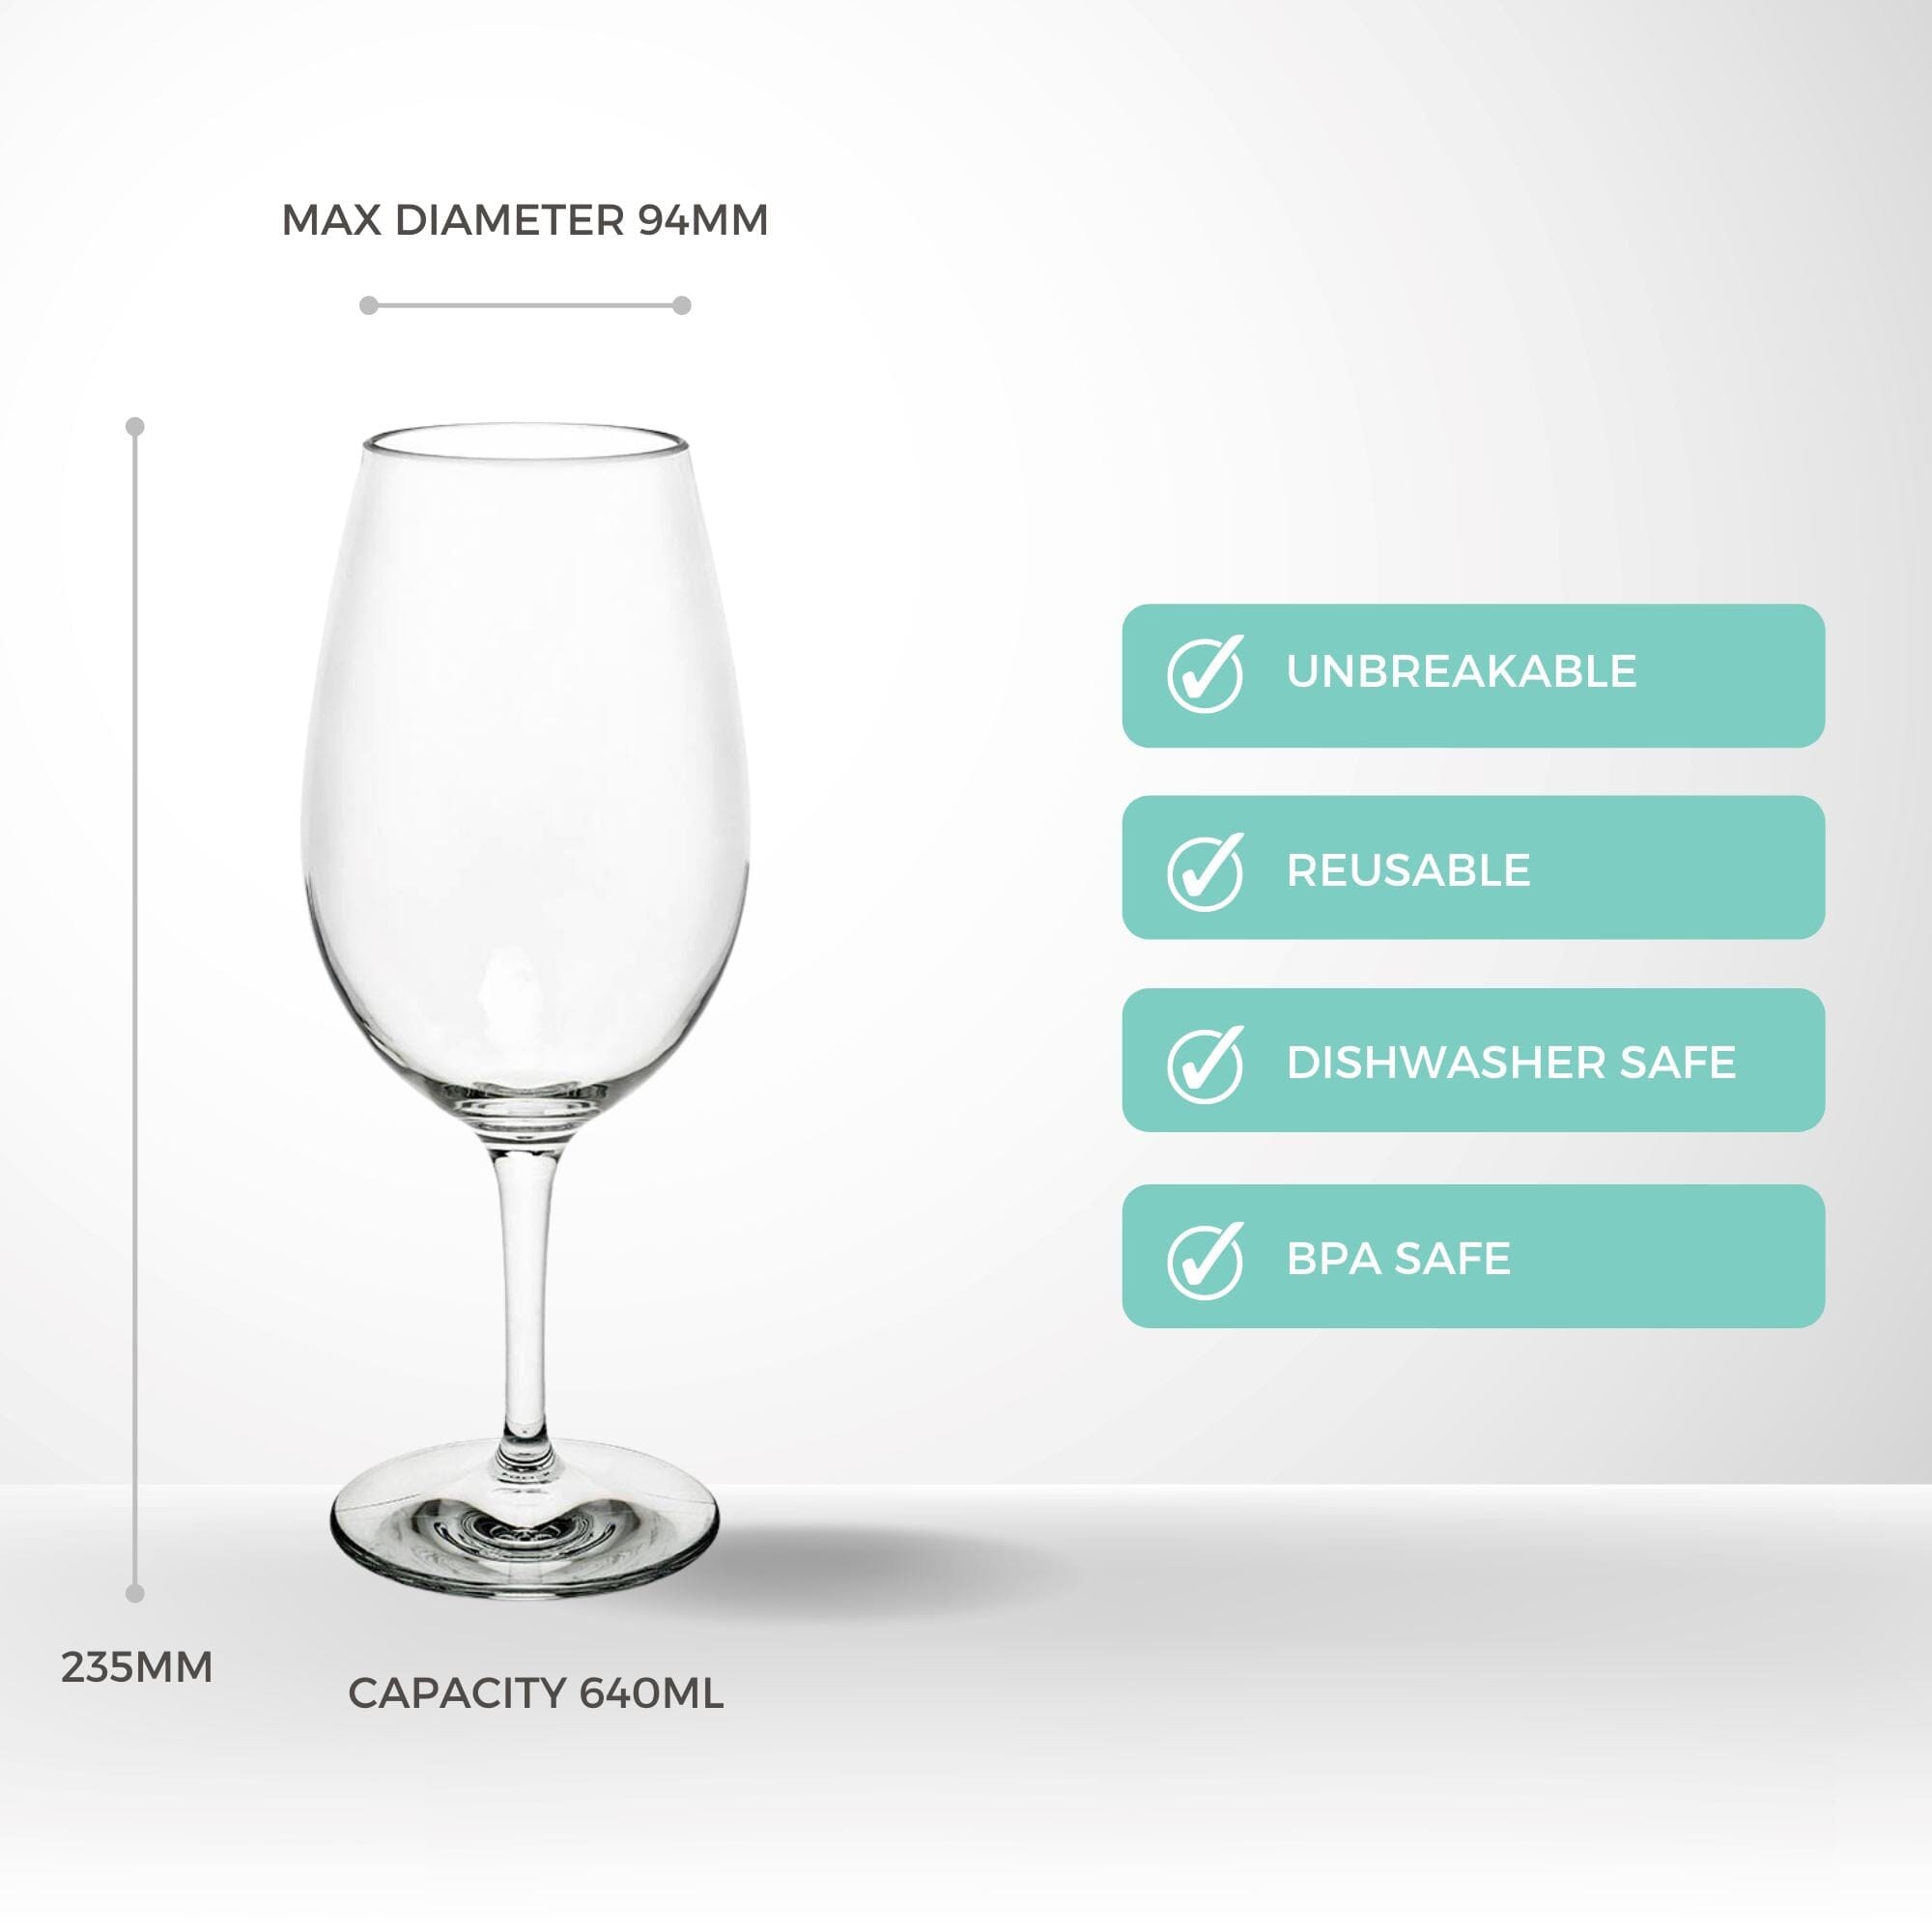 Unbreakable Red Wine Glasses 640ml - Set of 4 Wine Glass D-STILL Drinkware 